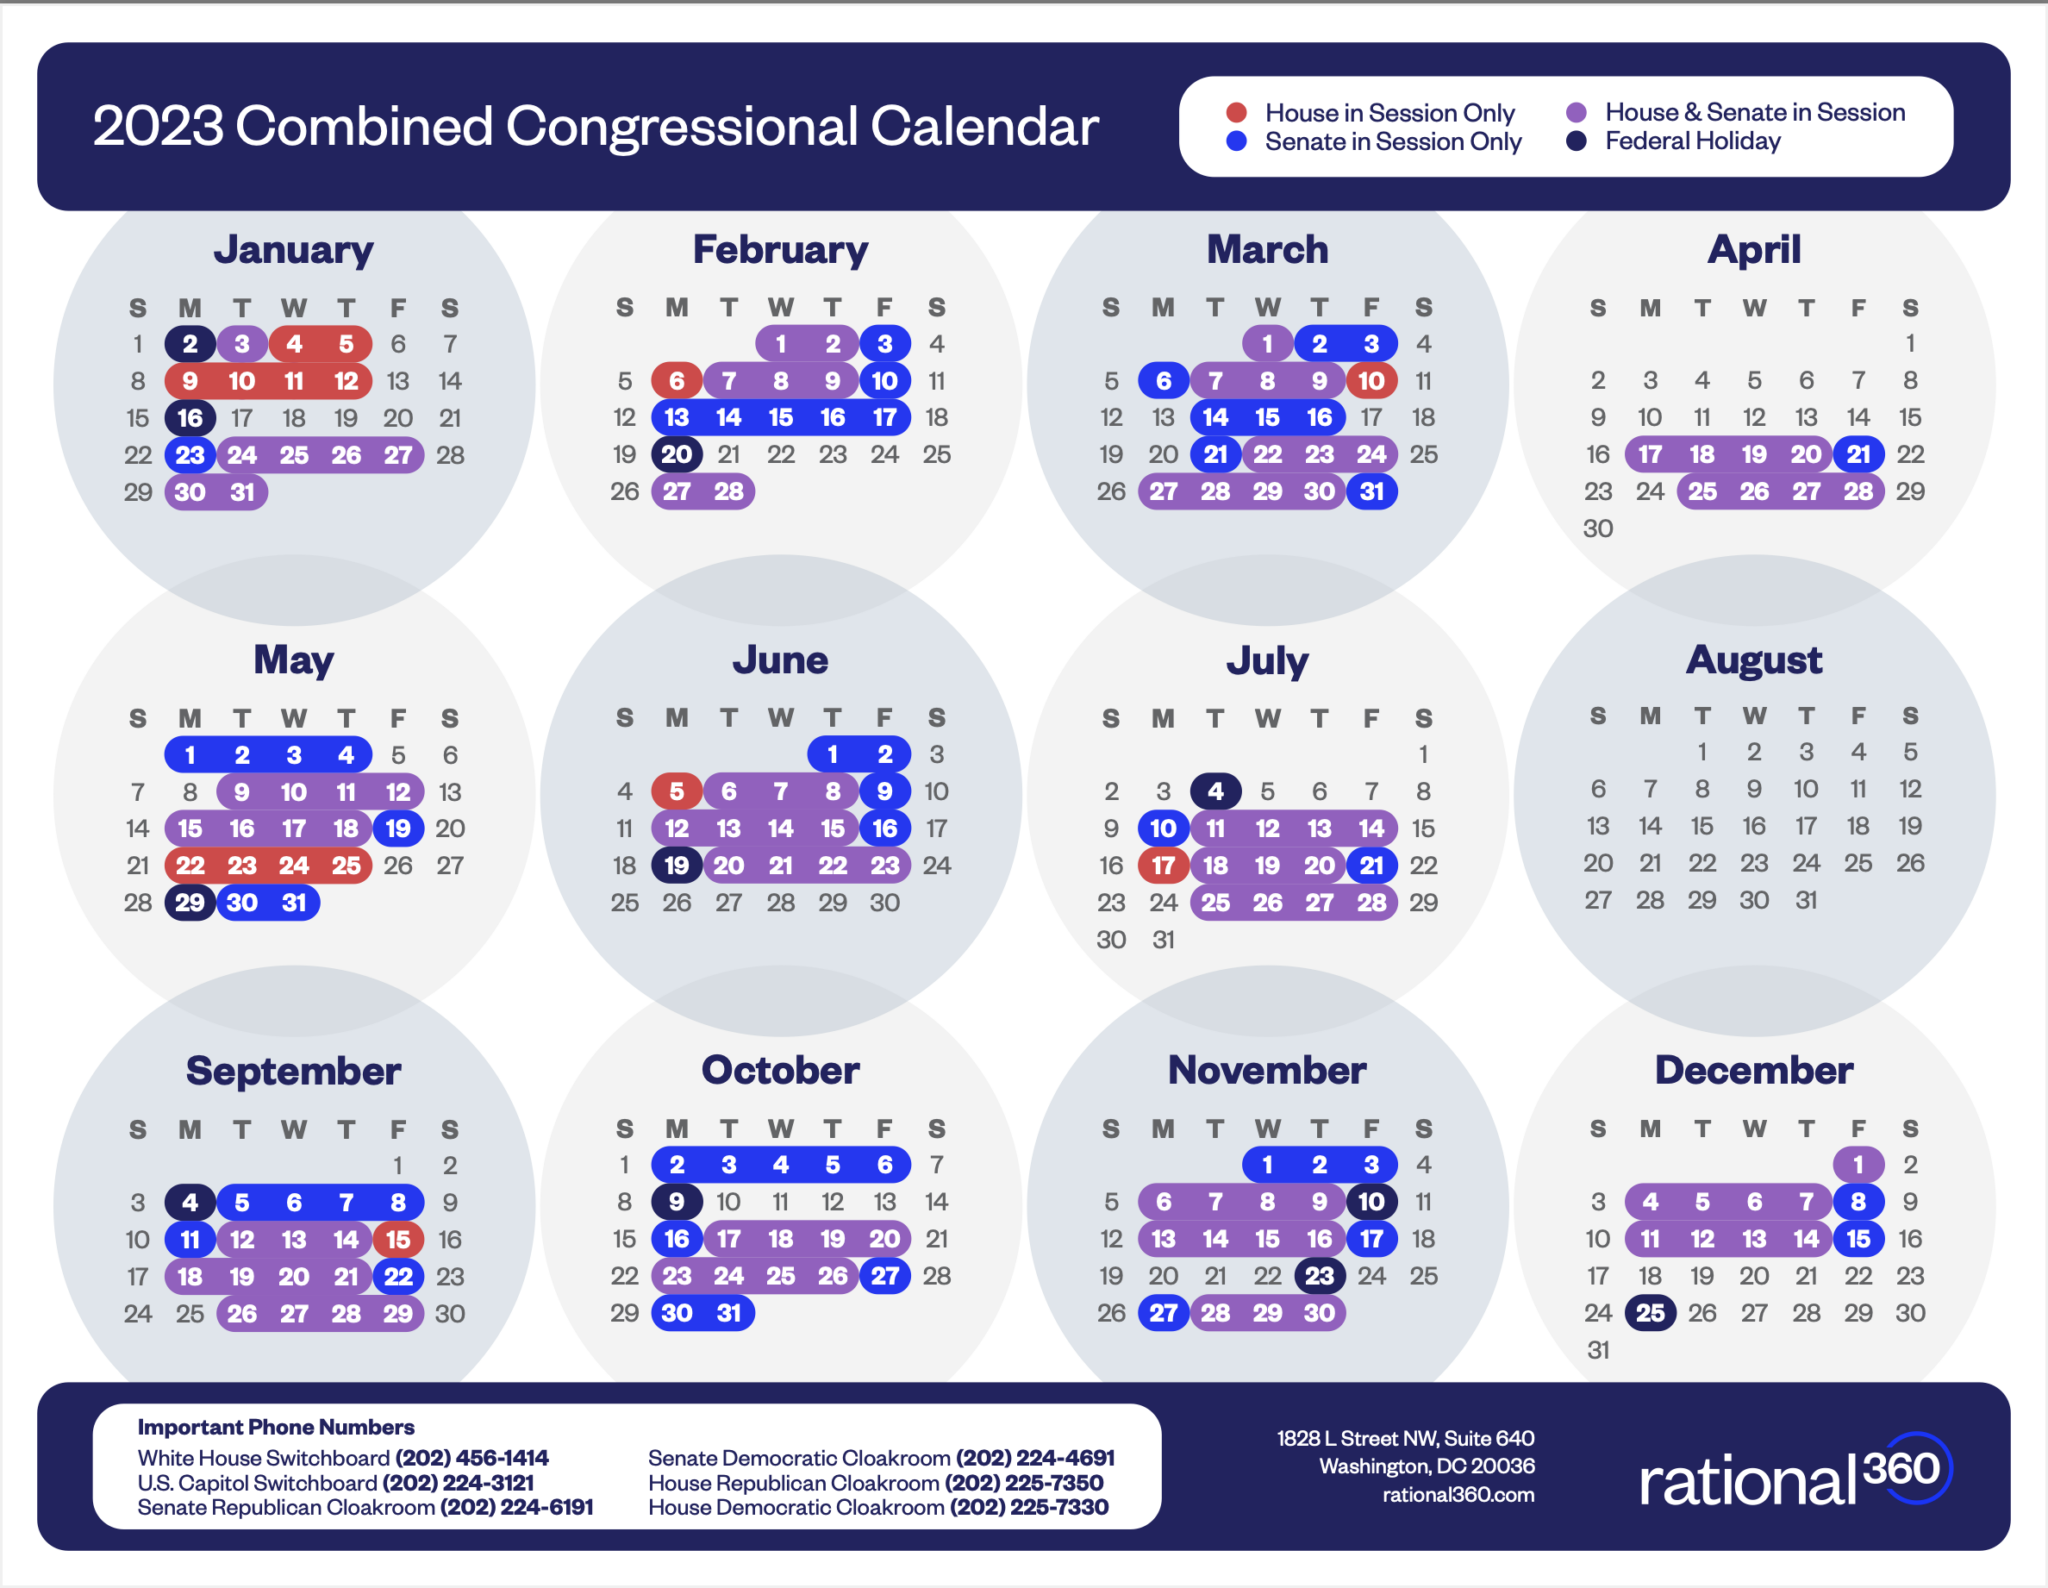 2023-combined-congressional-calendar-rational-360